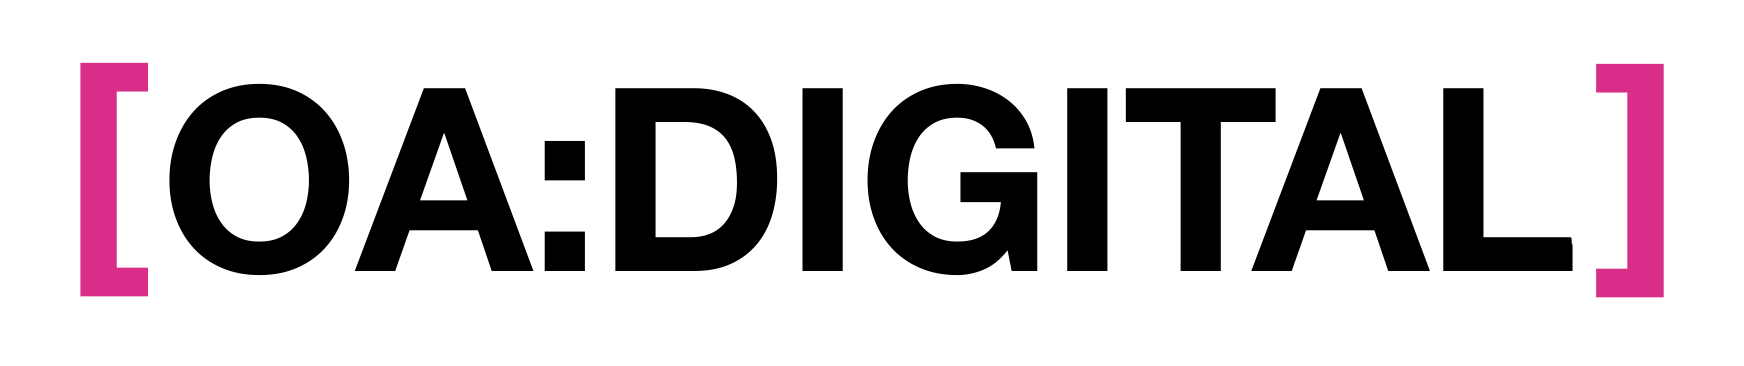 Overair Digital Logo